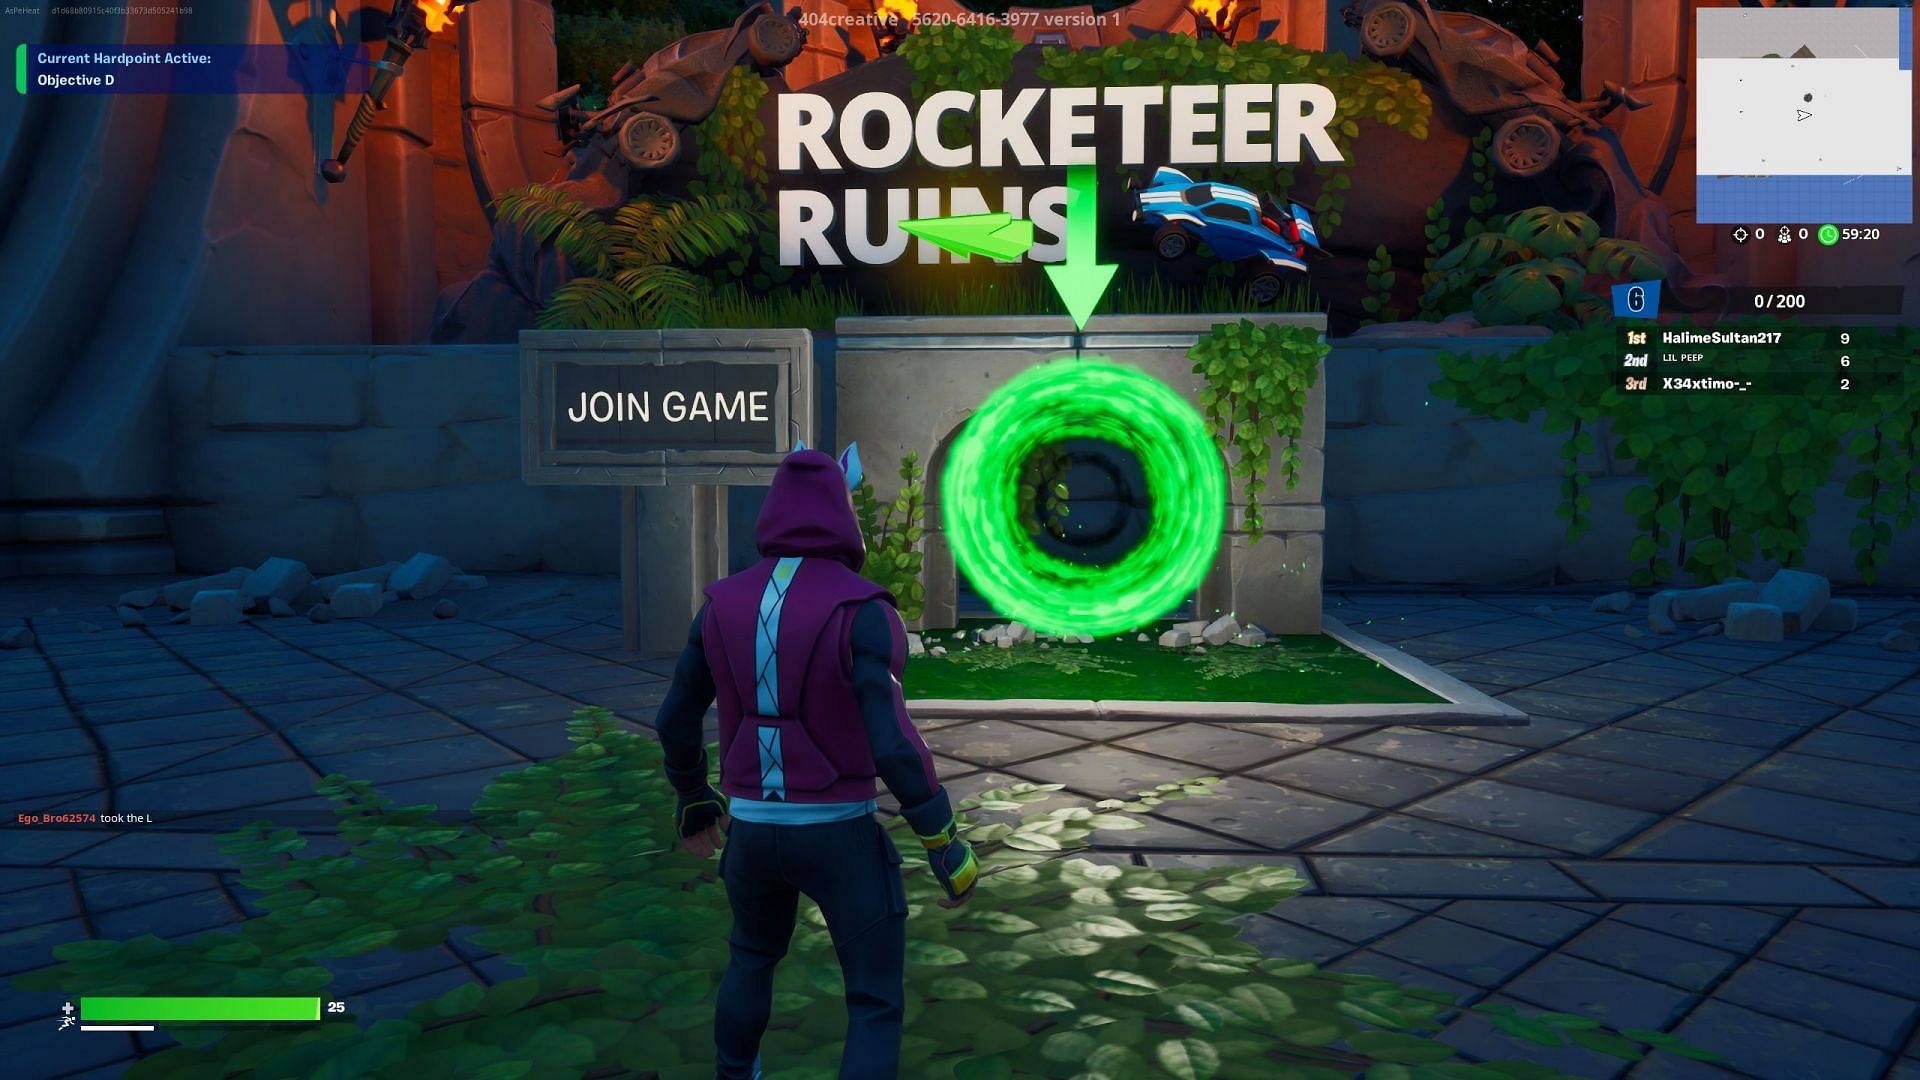 To enter the Rocketeer Ruins map, pass through the green portal (Image via Epic Games)